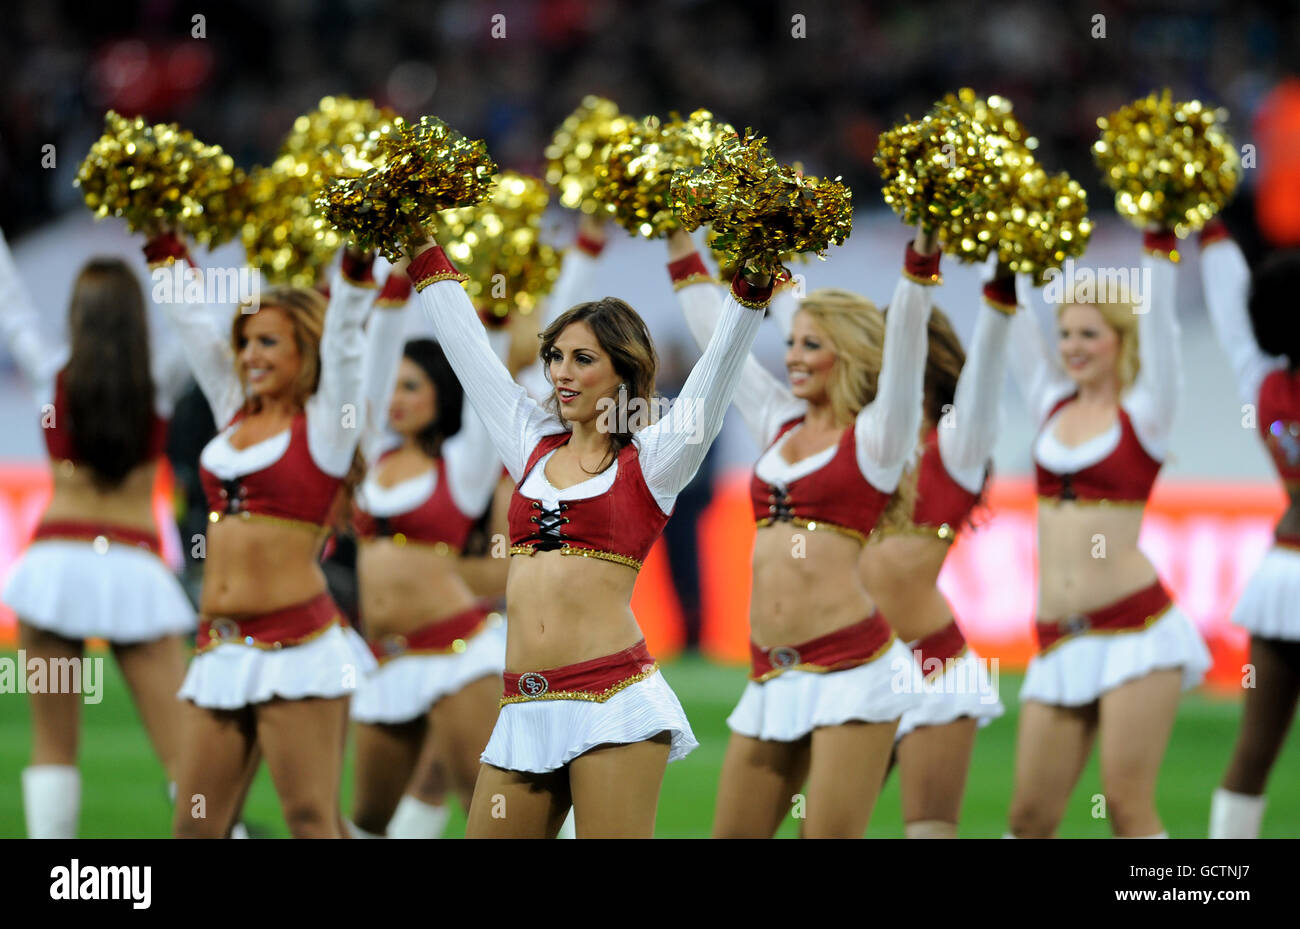 American Football - NFL - San Francisco 49ers v Denver Broncos - Wembley Stadium. San Francisco's Gold Rush cheerleaders entertain the crowd Stock Photo